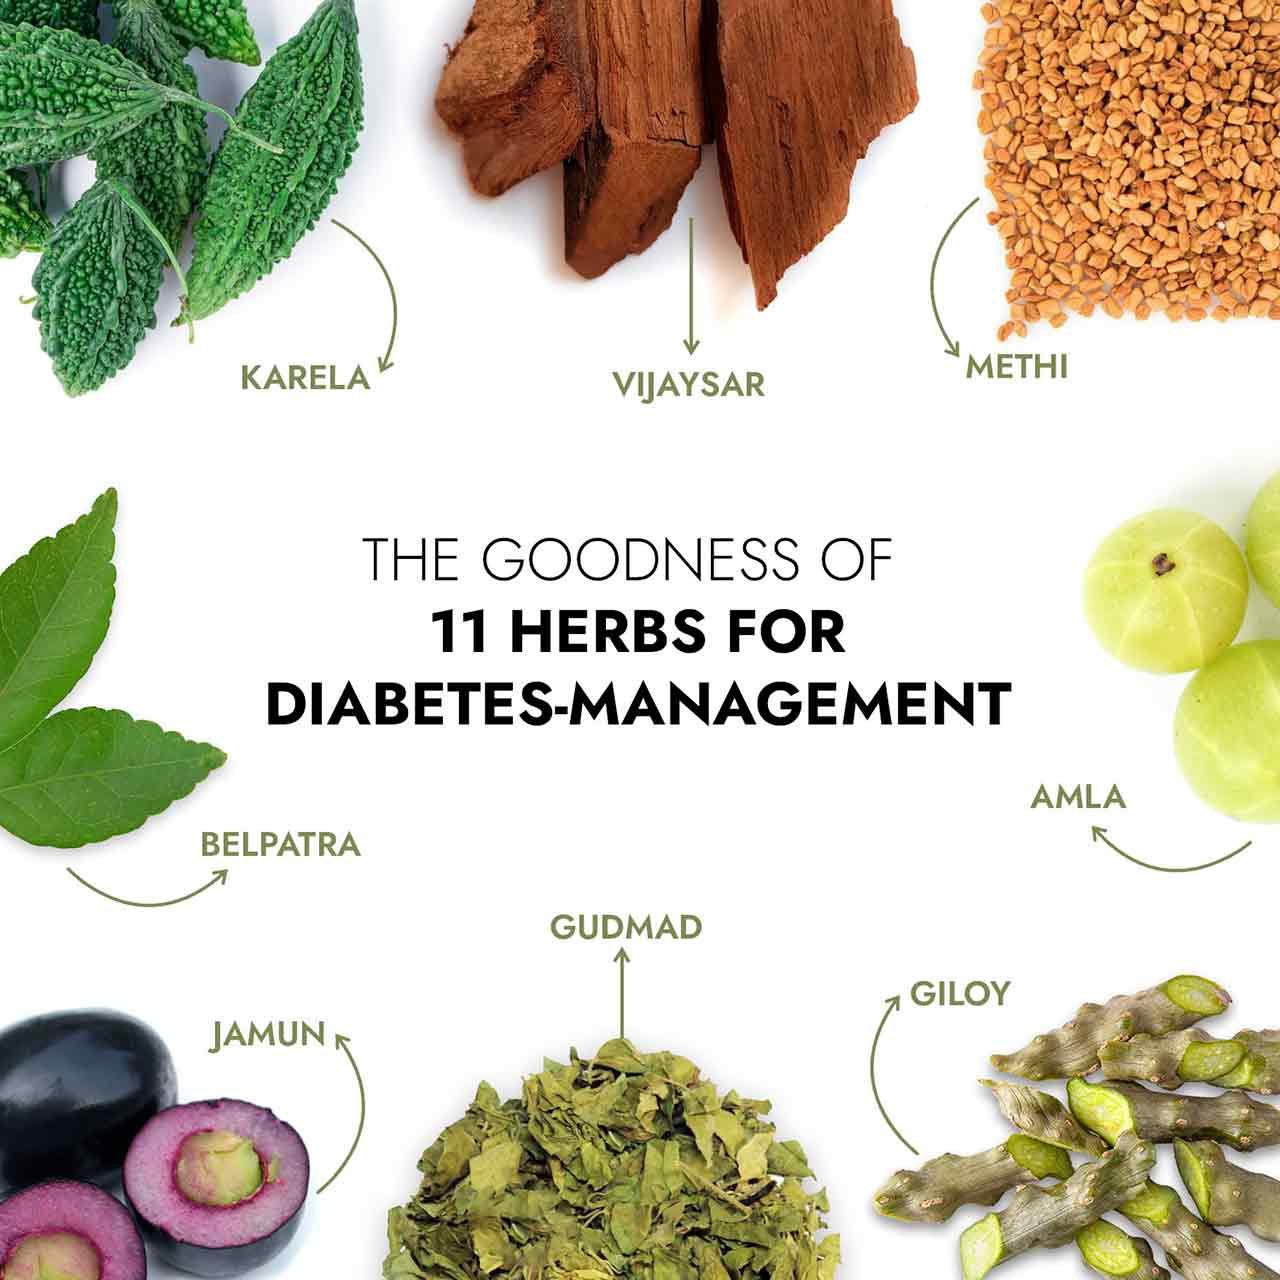 Dia Free Juice is made of 11 Natural Herbs like Karela, Jamun, Gudmad, Vijaysaar, Amla, Giloy, Methi, Guduchi, Katuki,  Tulsi, Belpatra